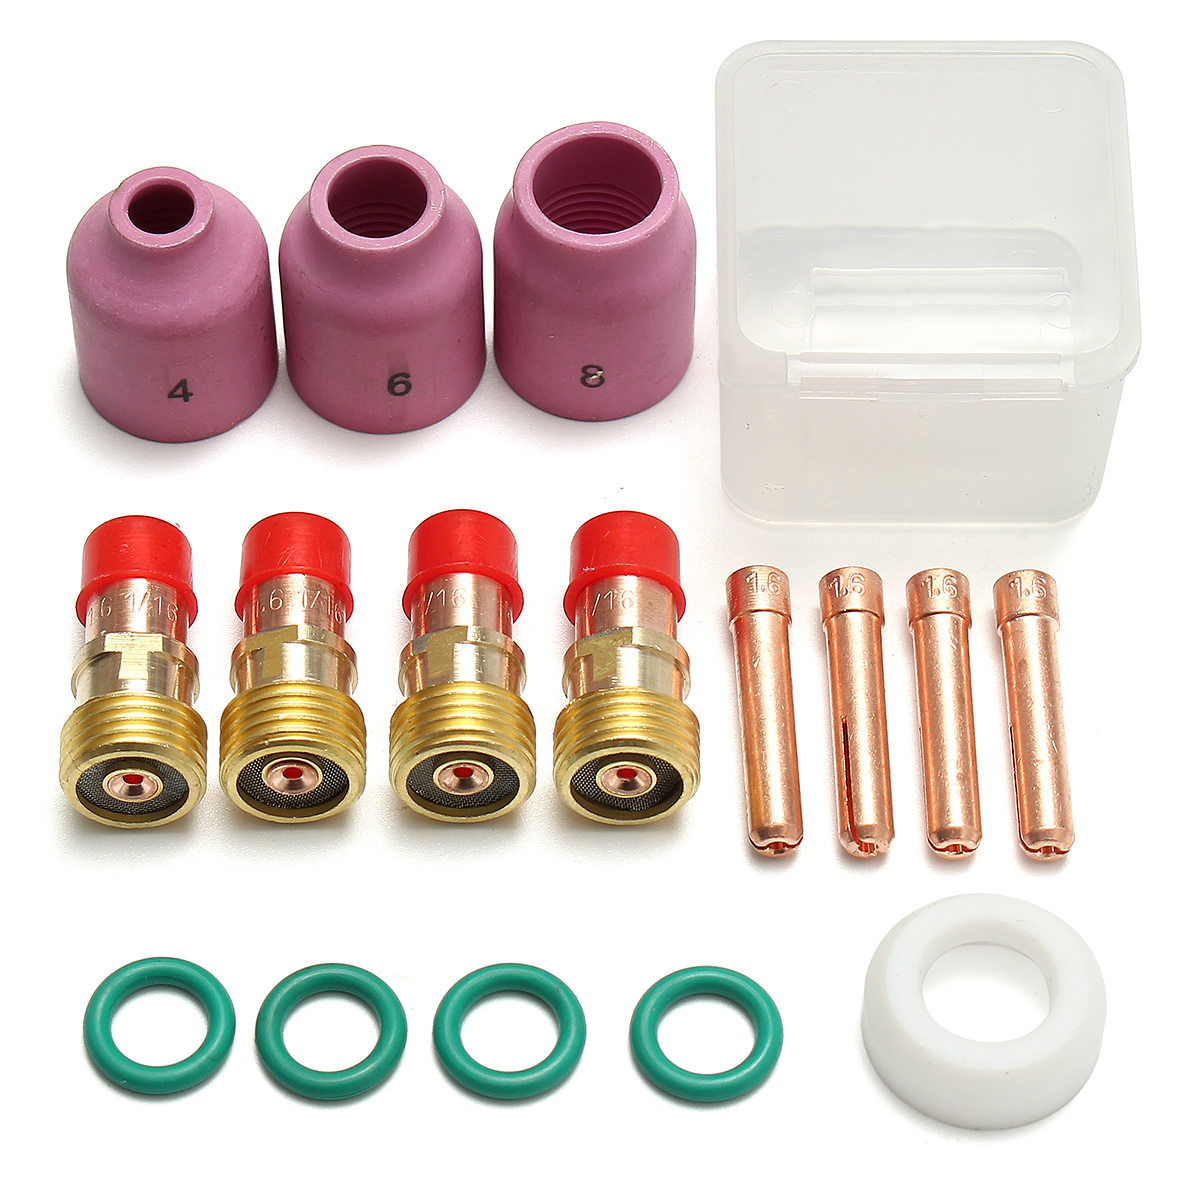 

17pcs TIG Stubby Gas Lens Accessory Nozzle Pyrex Cup Kit WP17/18/26 1.6mm 1/16inch